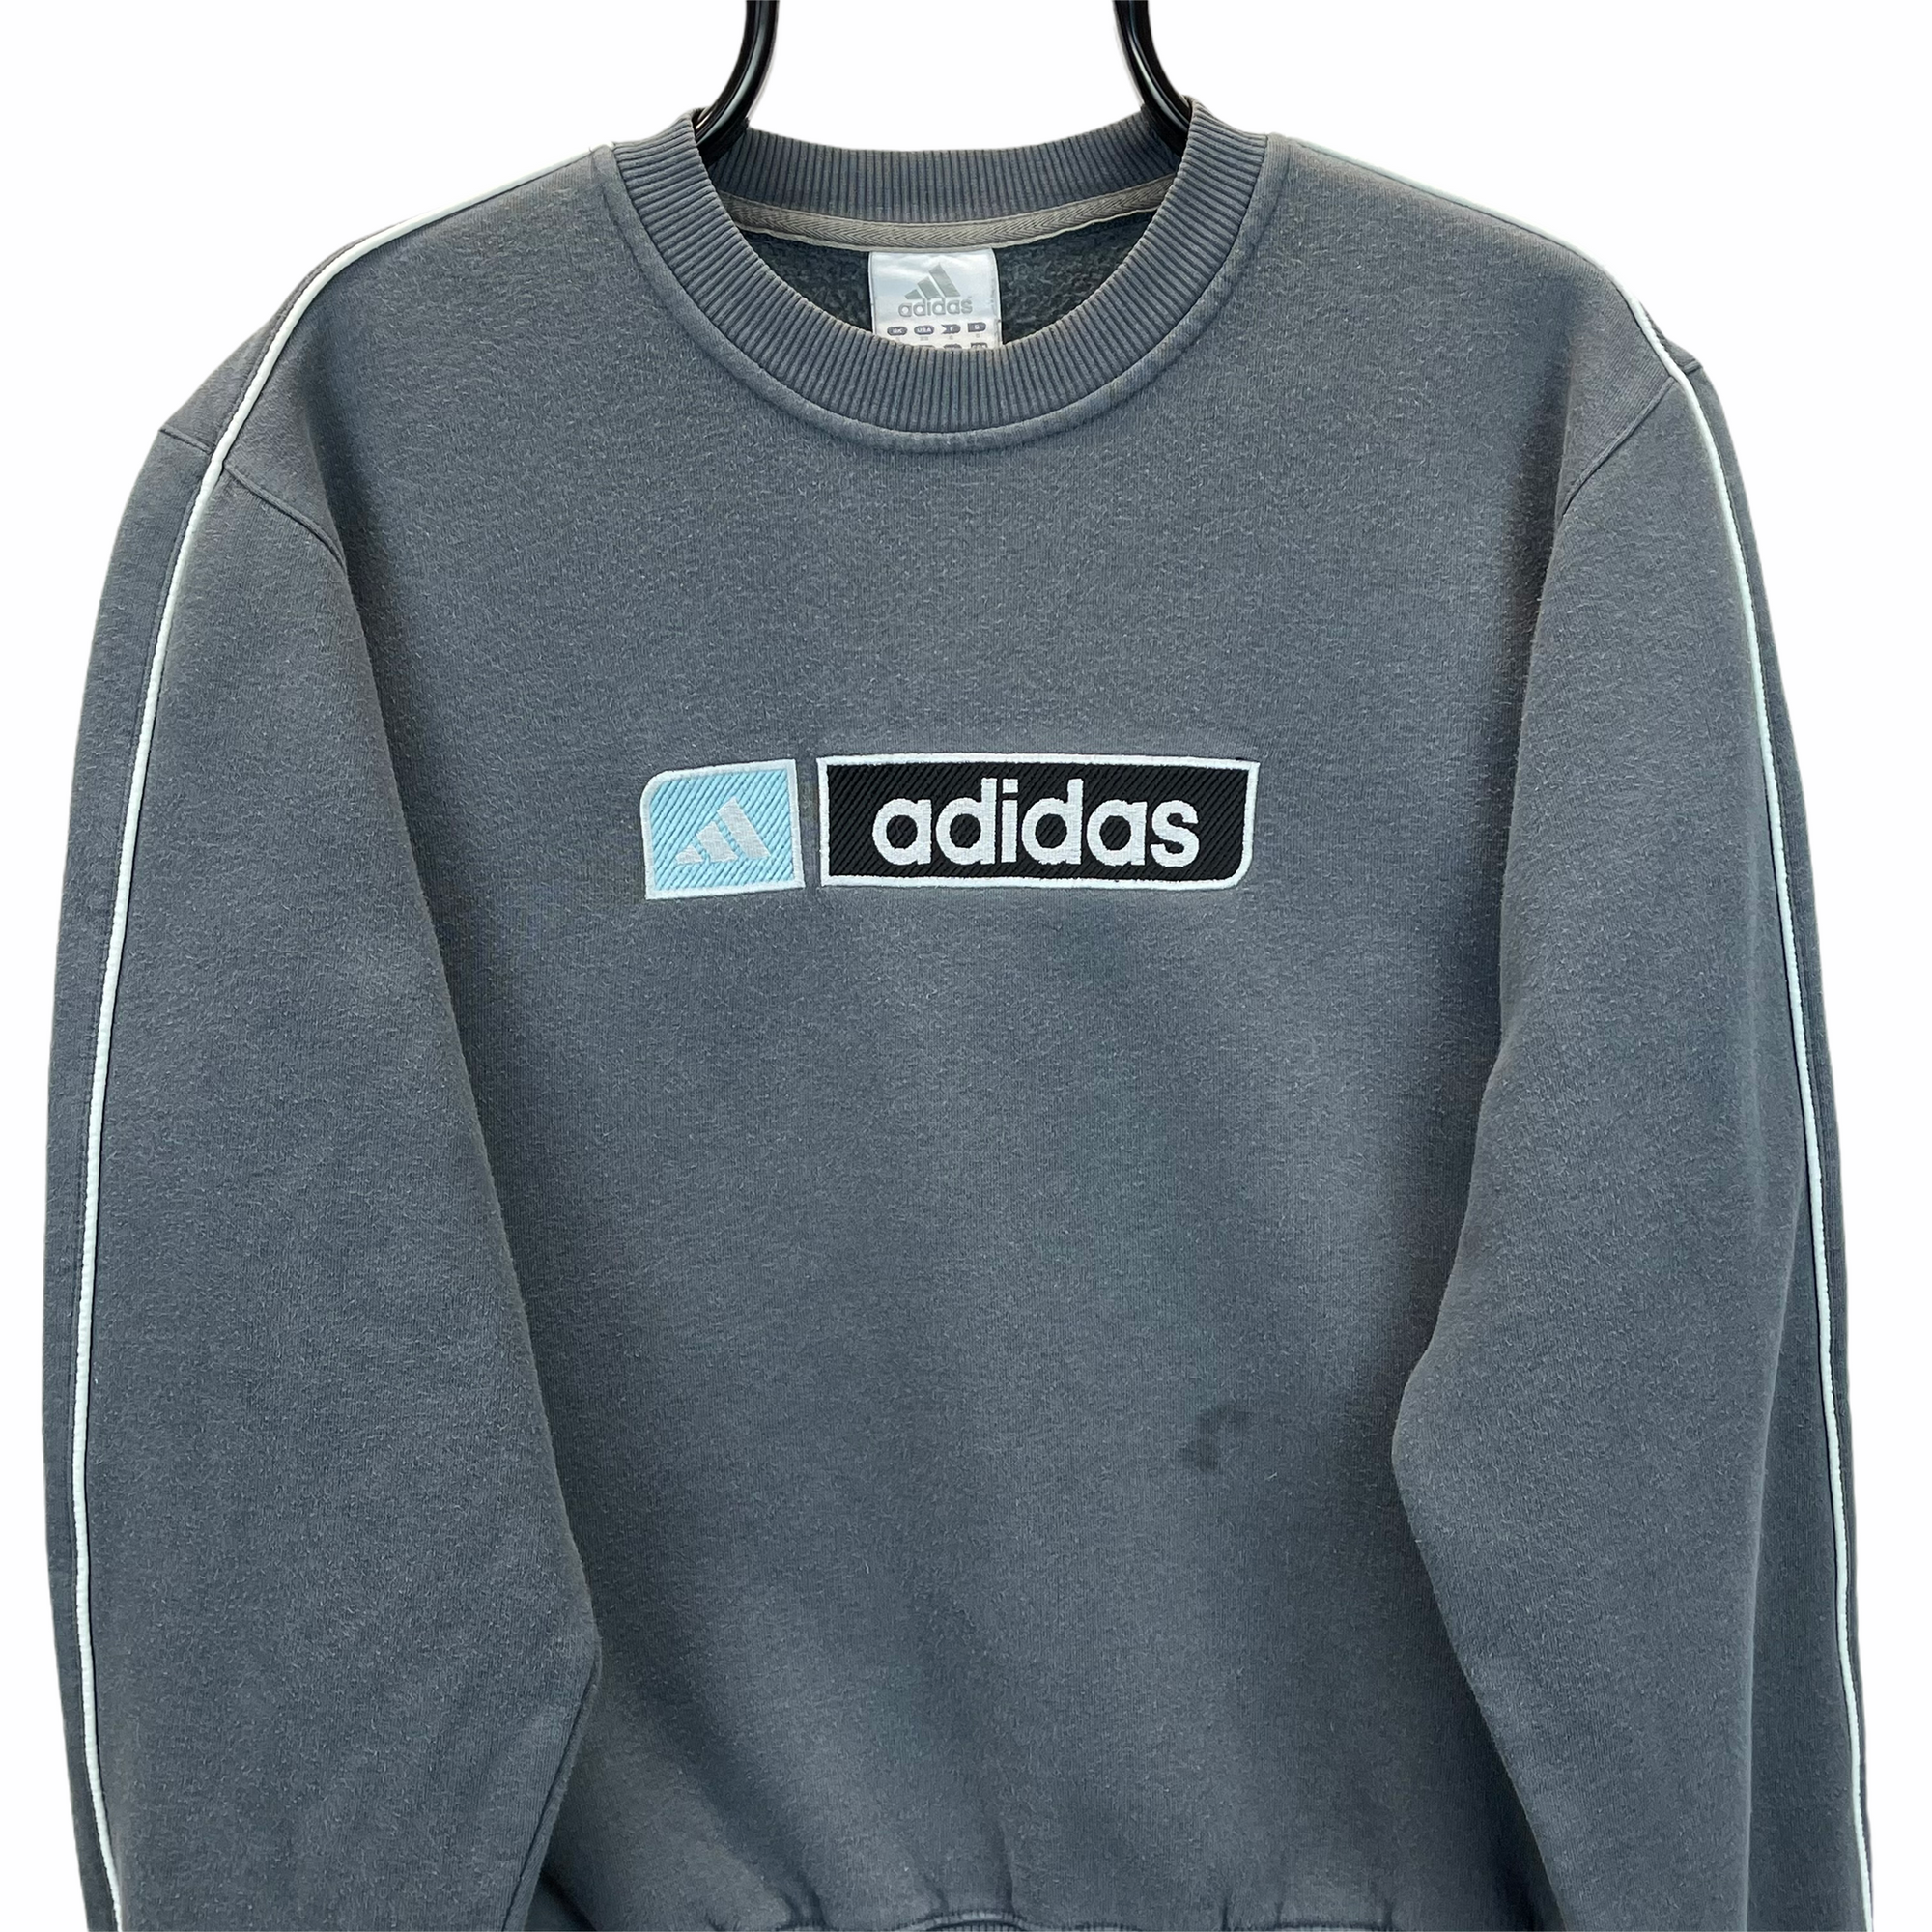 Vintage Adidas Spellout Sweatshirt in Washed Black - Men's Medium/Women's Large